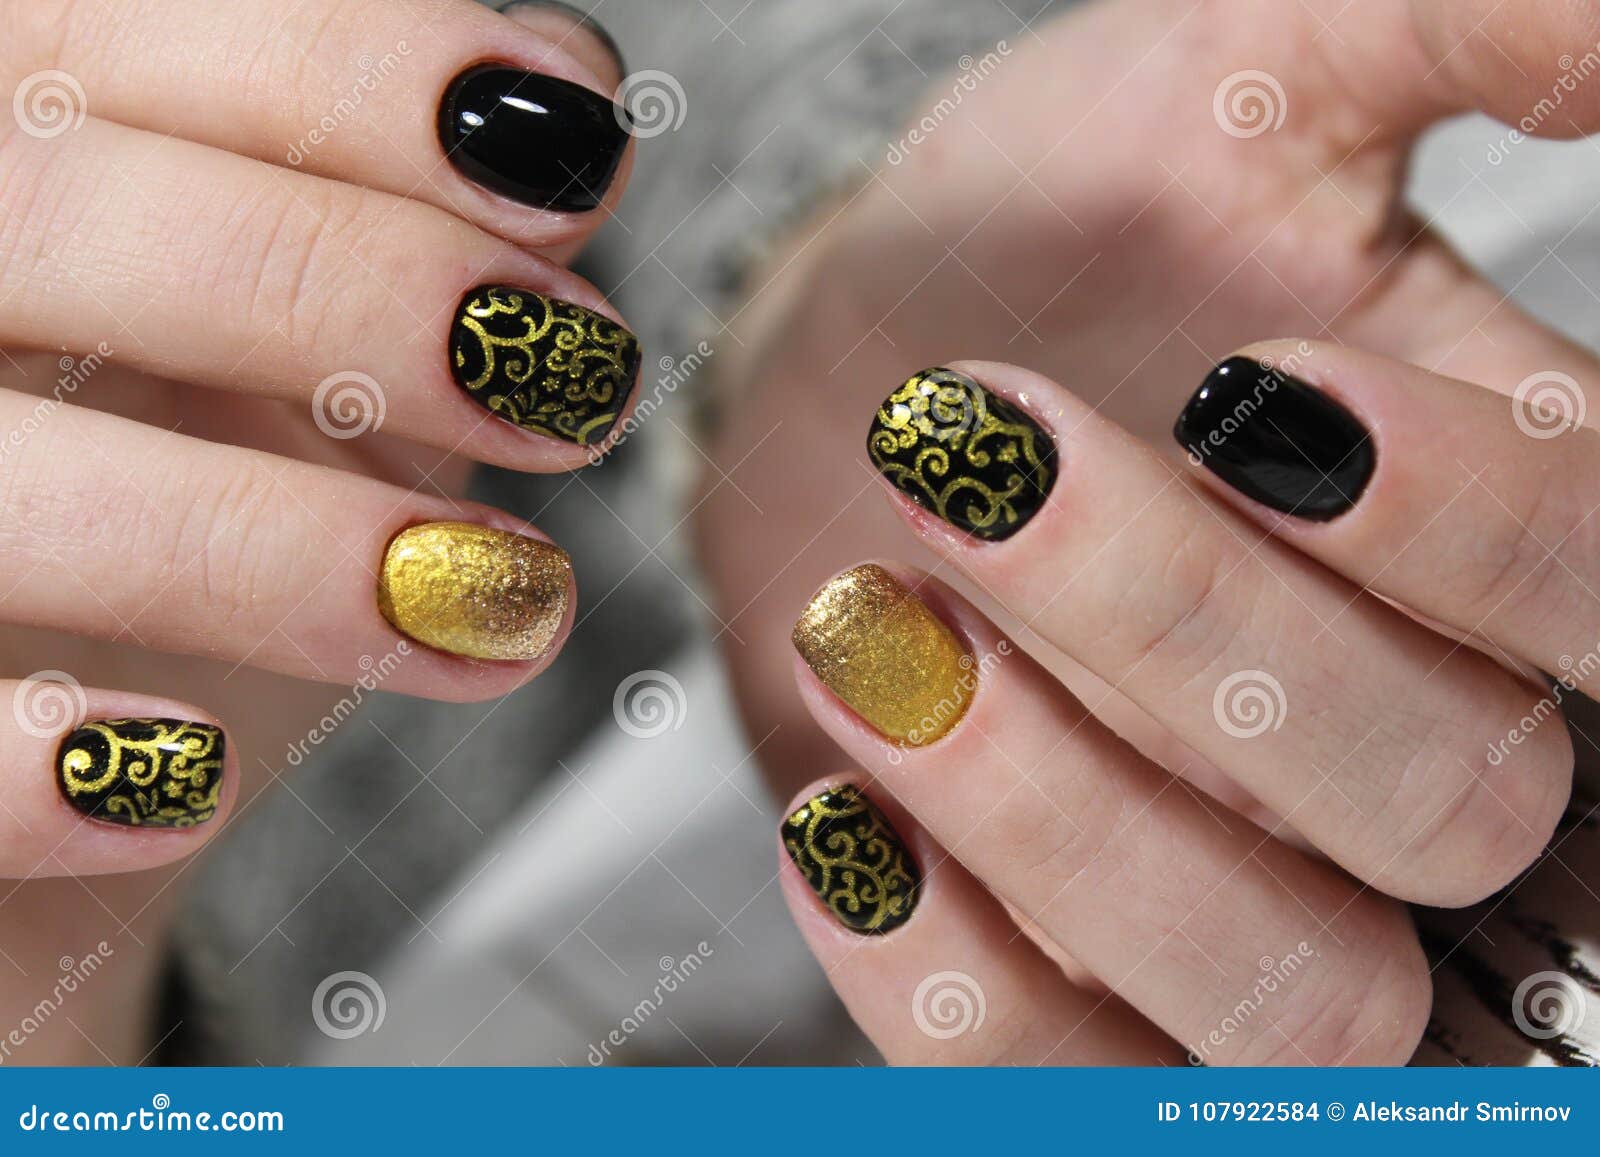 Manicure - Beauty Treatment Photo of Nice Manicured Woman Fingernails ...